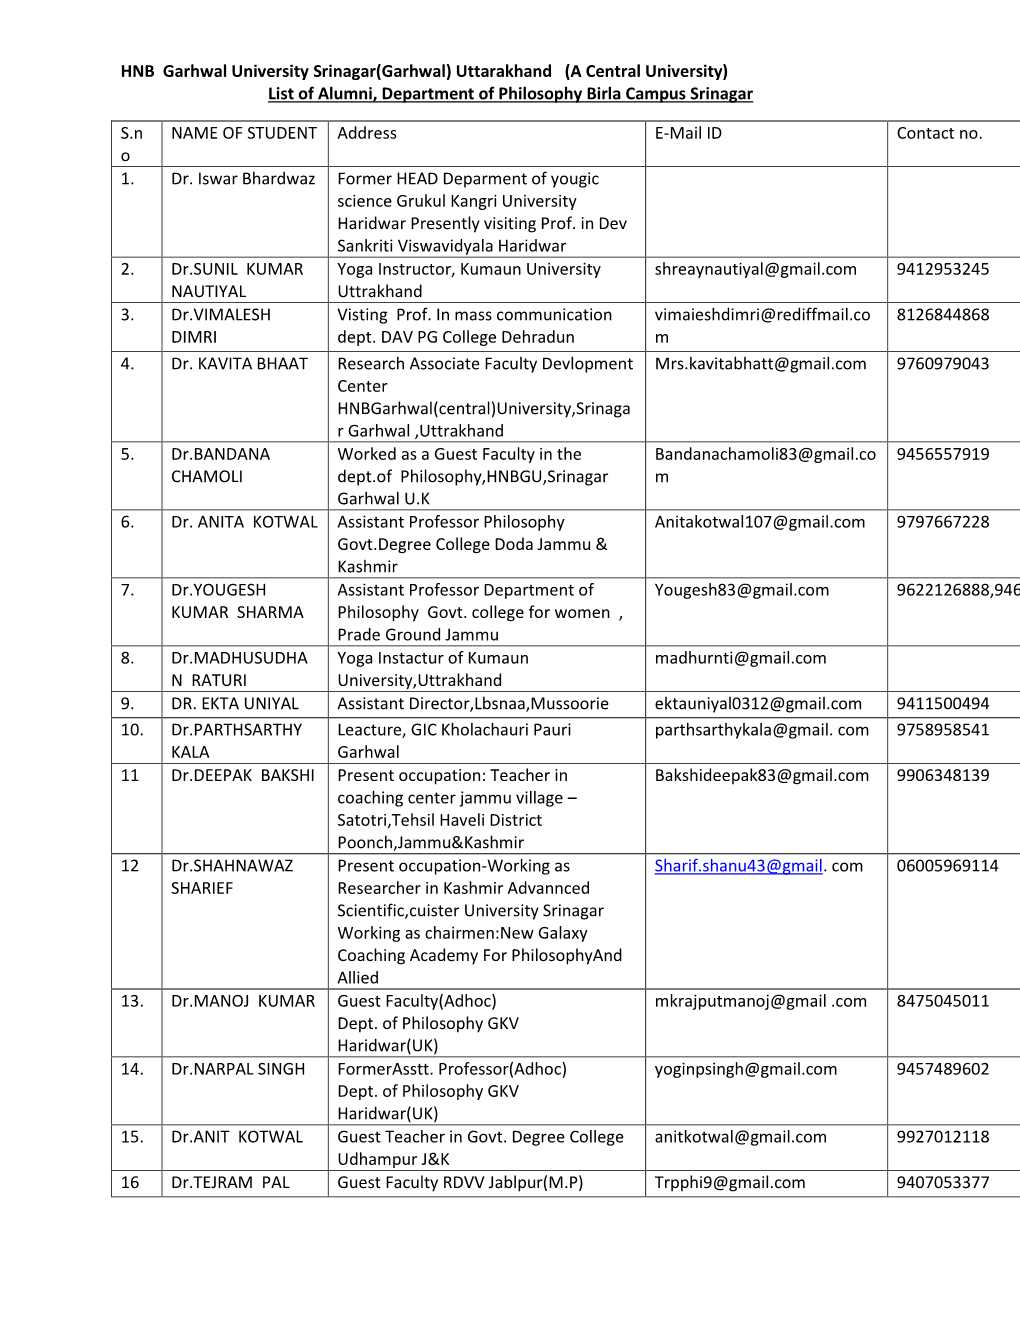 (A Central University) List of Alumni, Department of Philosophy Birla Campus Srinagar